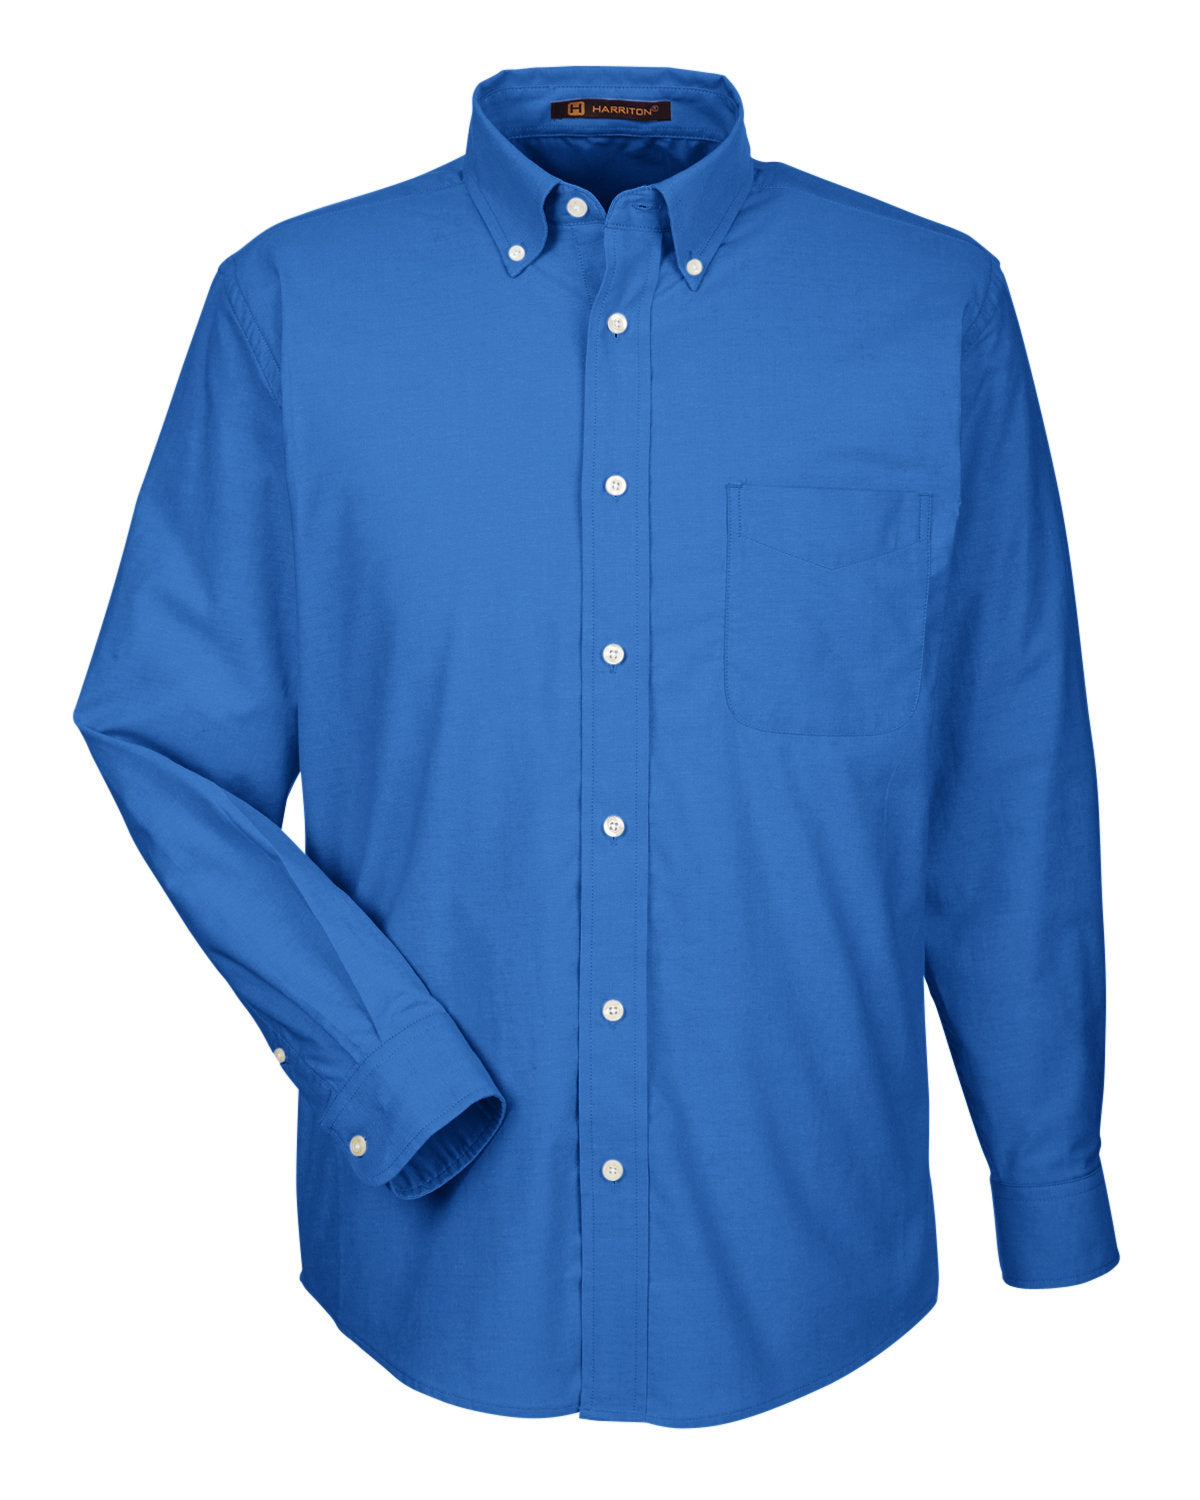 Harriton-M600 Oxford Shirt Long Sleeve for Men